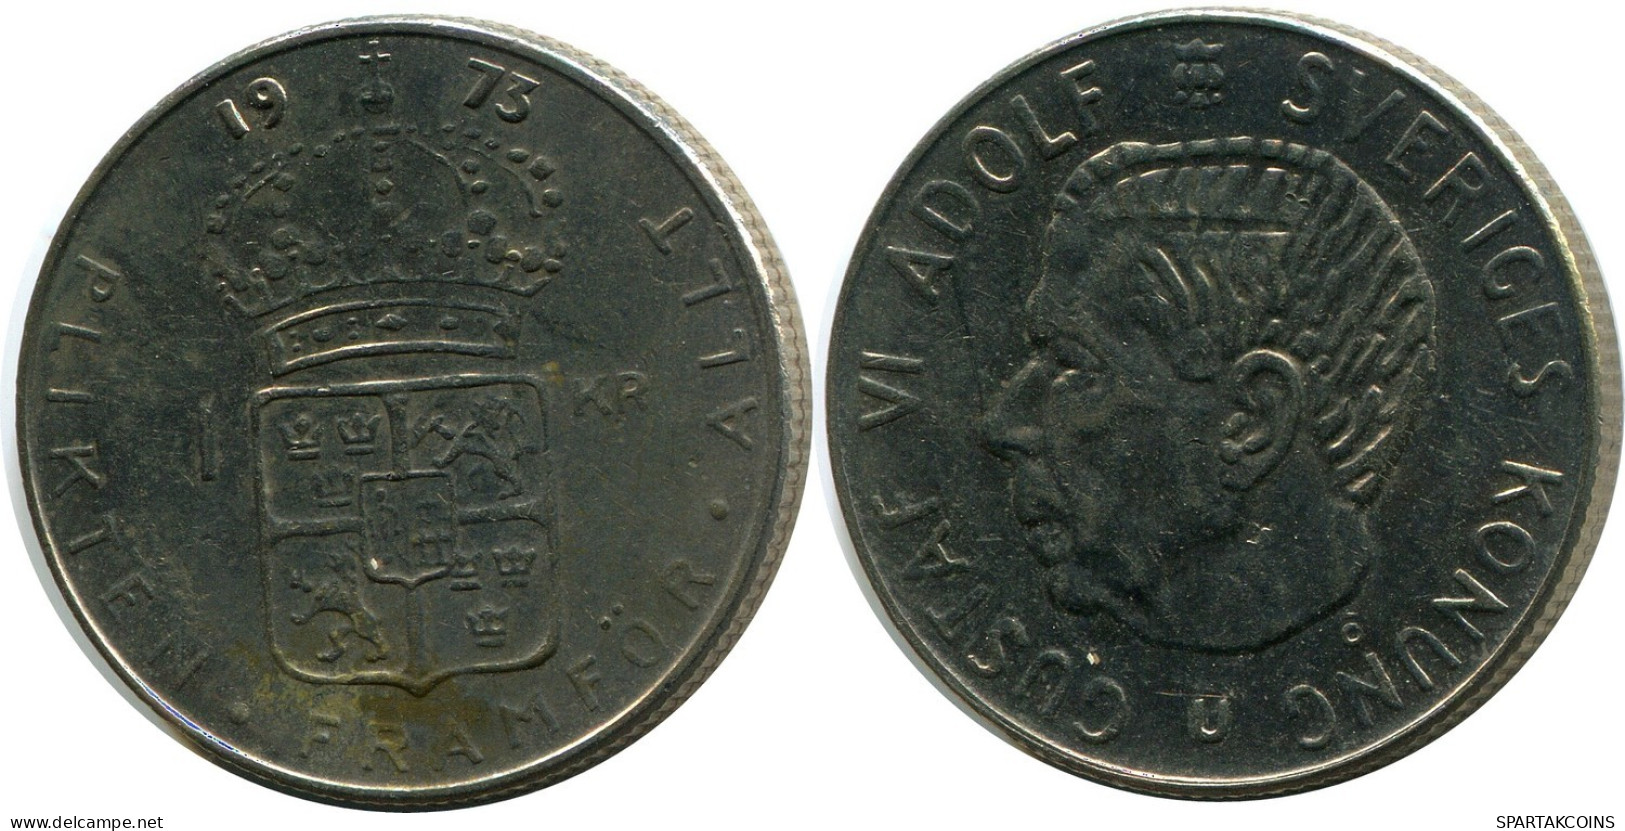 1 KRONA 1973 SWEDEN Gustaf VI Adolf Coin #AZ367.U.A - Sweden